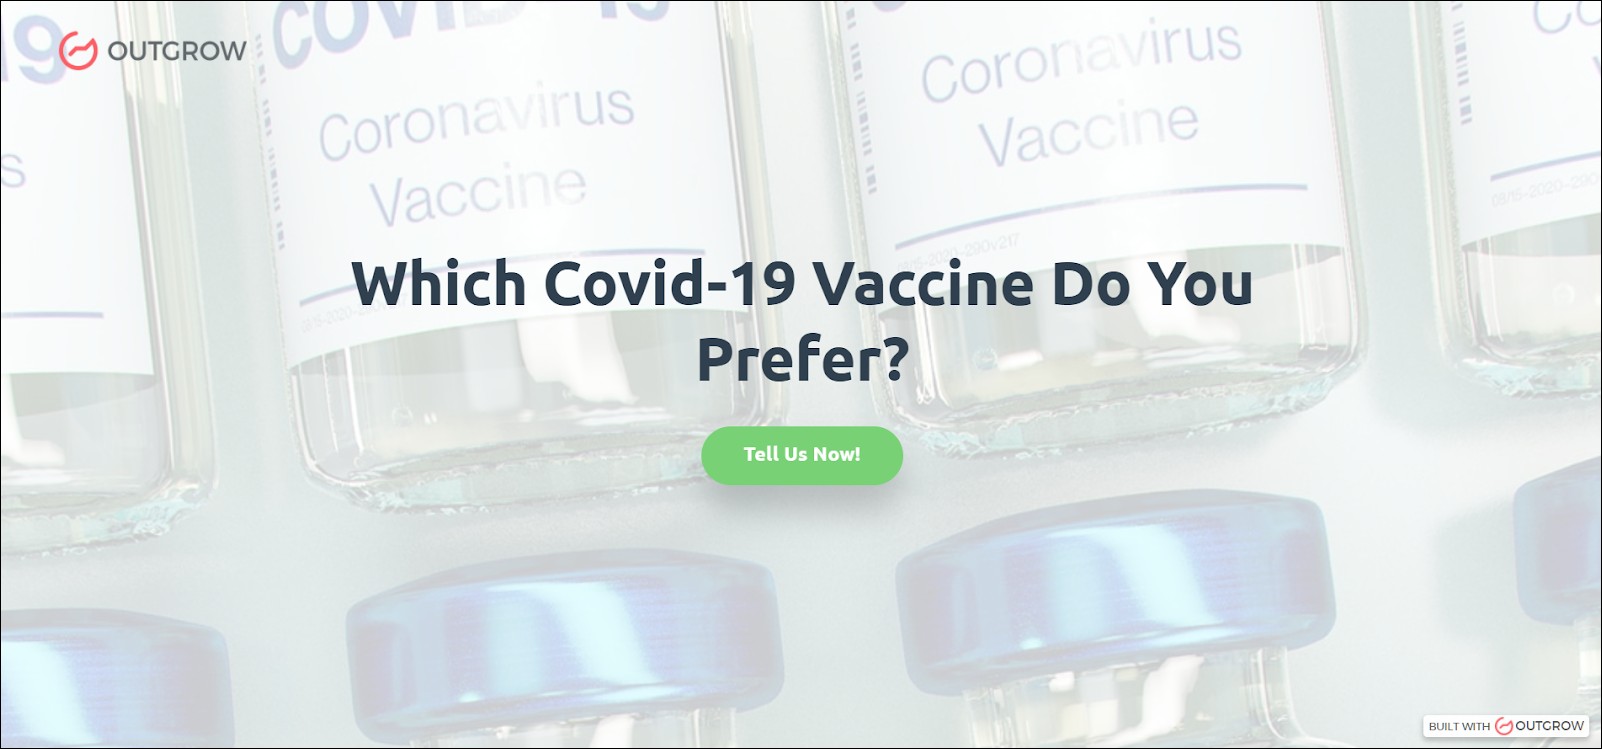 Outgrow COVID19 vaccination create a poll